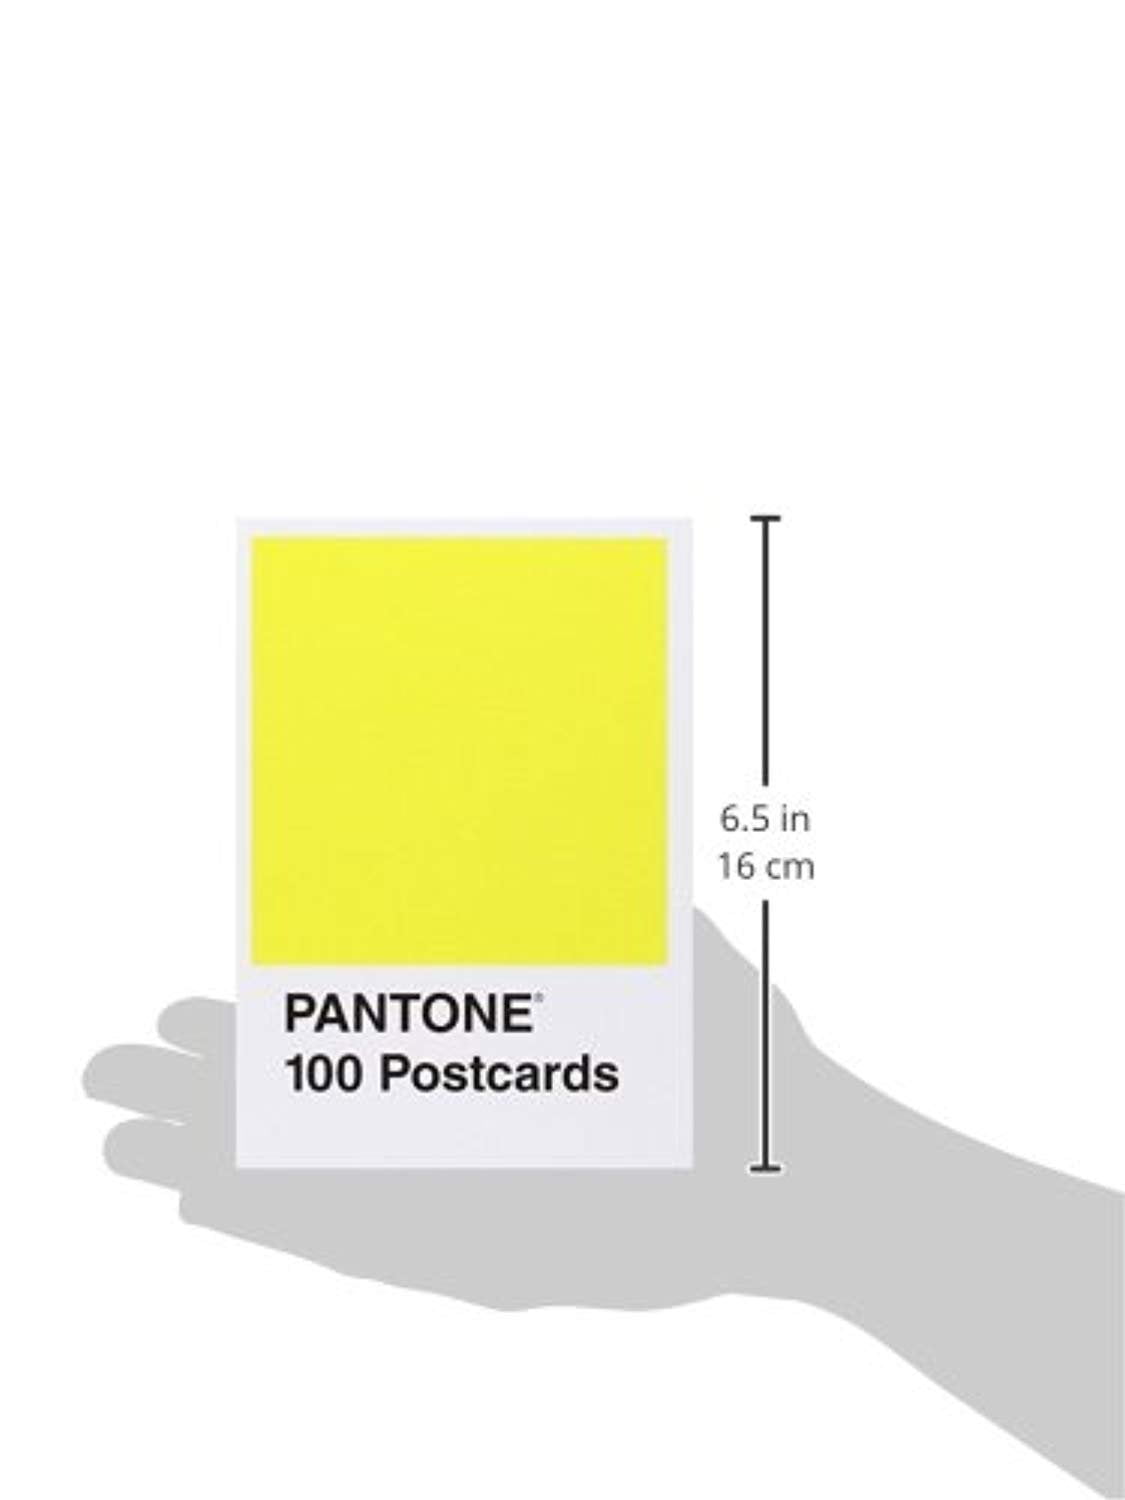 Pantone postcard box: 100 postcards Abrams 13756226 купить в  интернет-магазине Wildberries